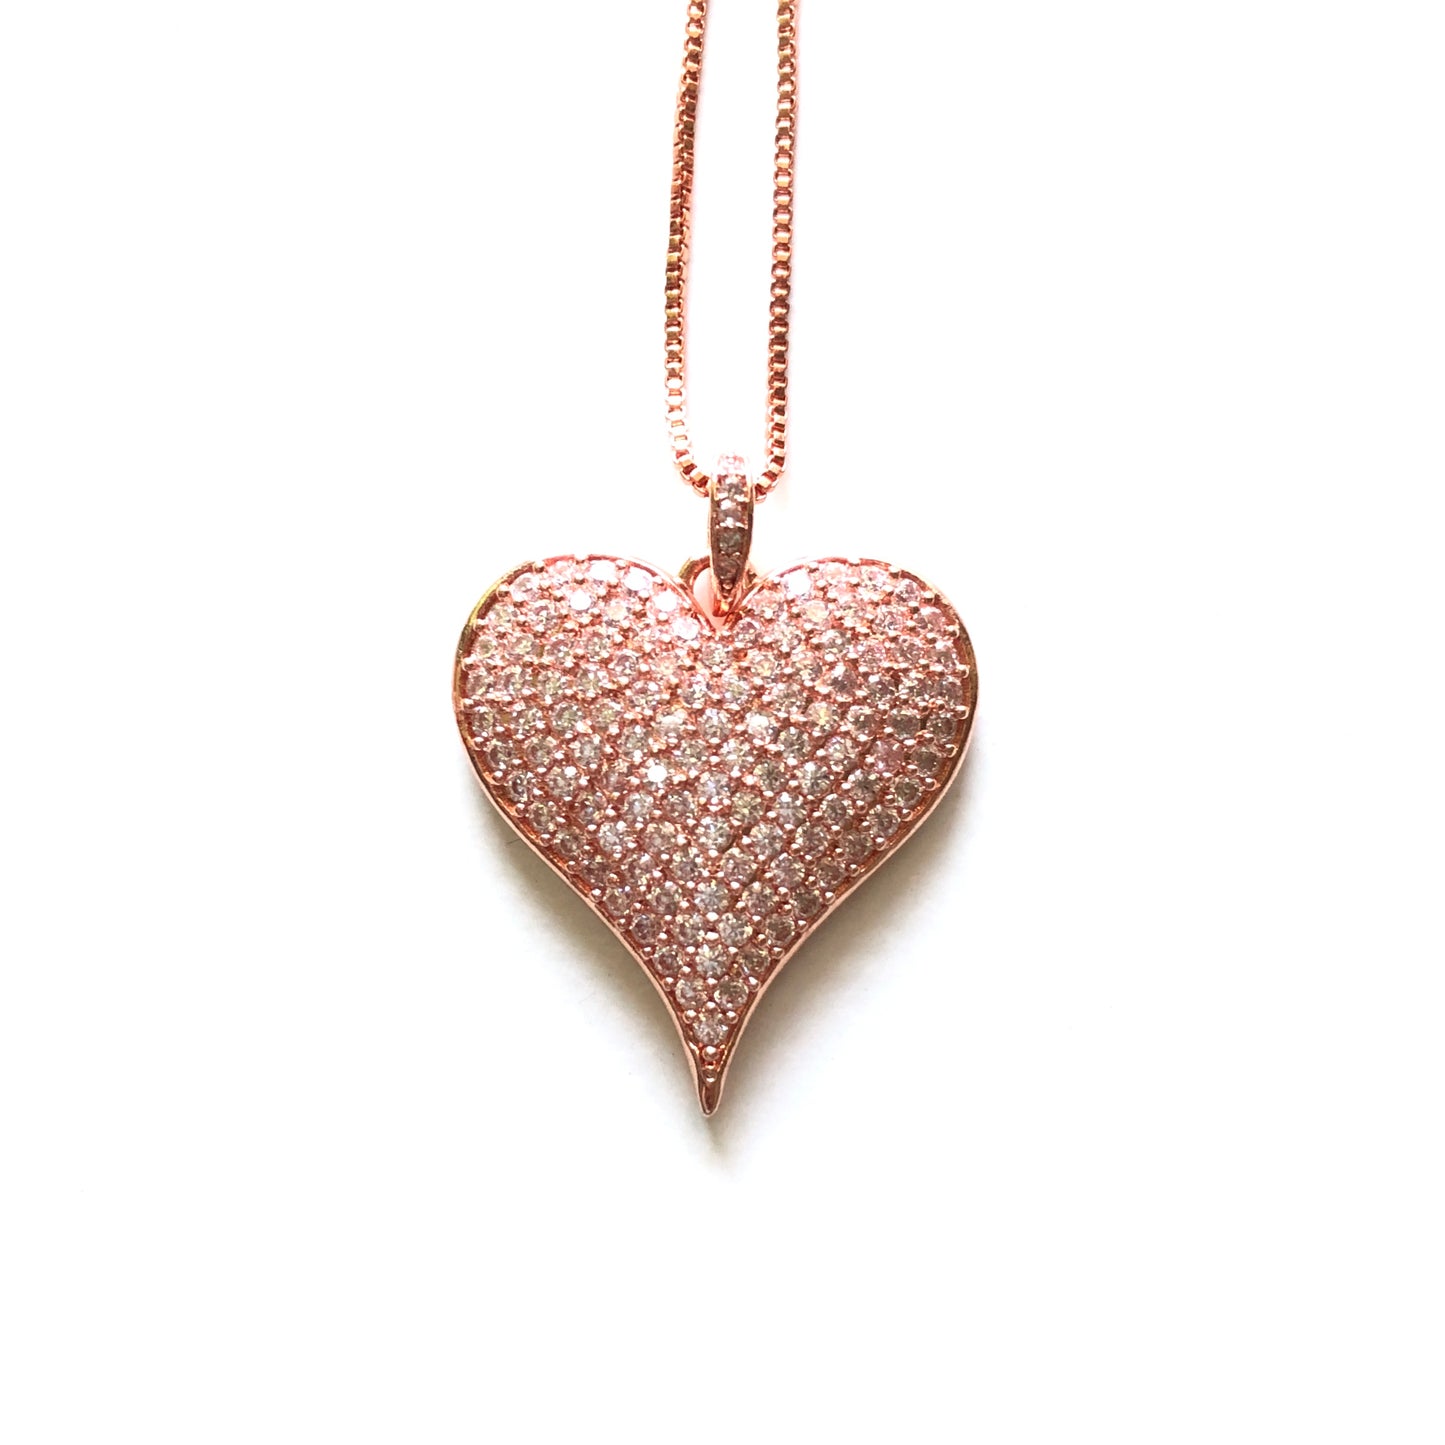 5pcs/lot 30*23mm CZ Paved Heart Necklace Rose Gold Necklaces Love & Heart Necklaces Charms Beads Beyond